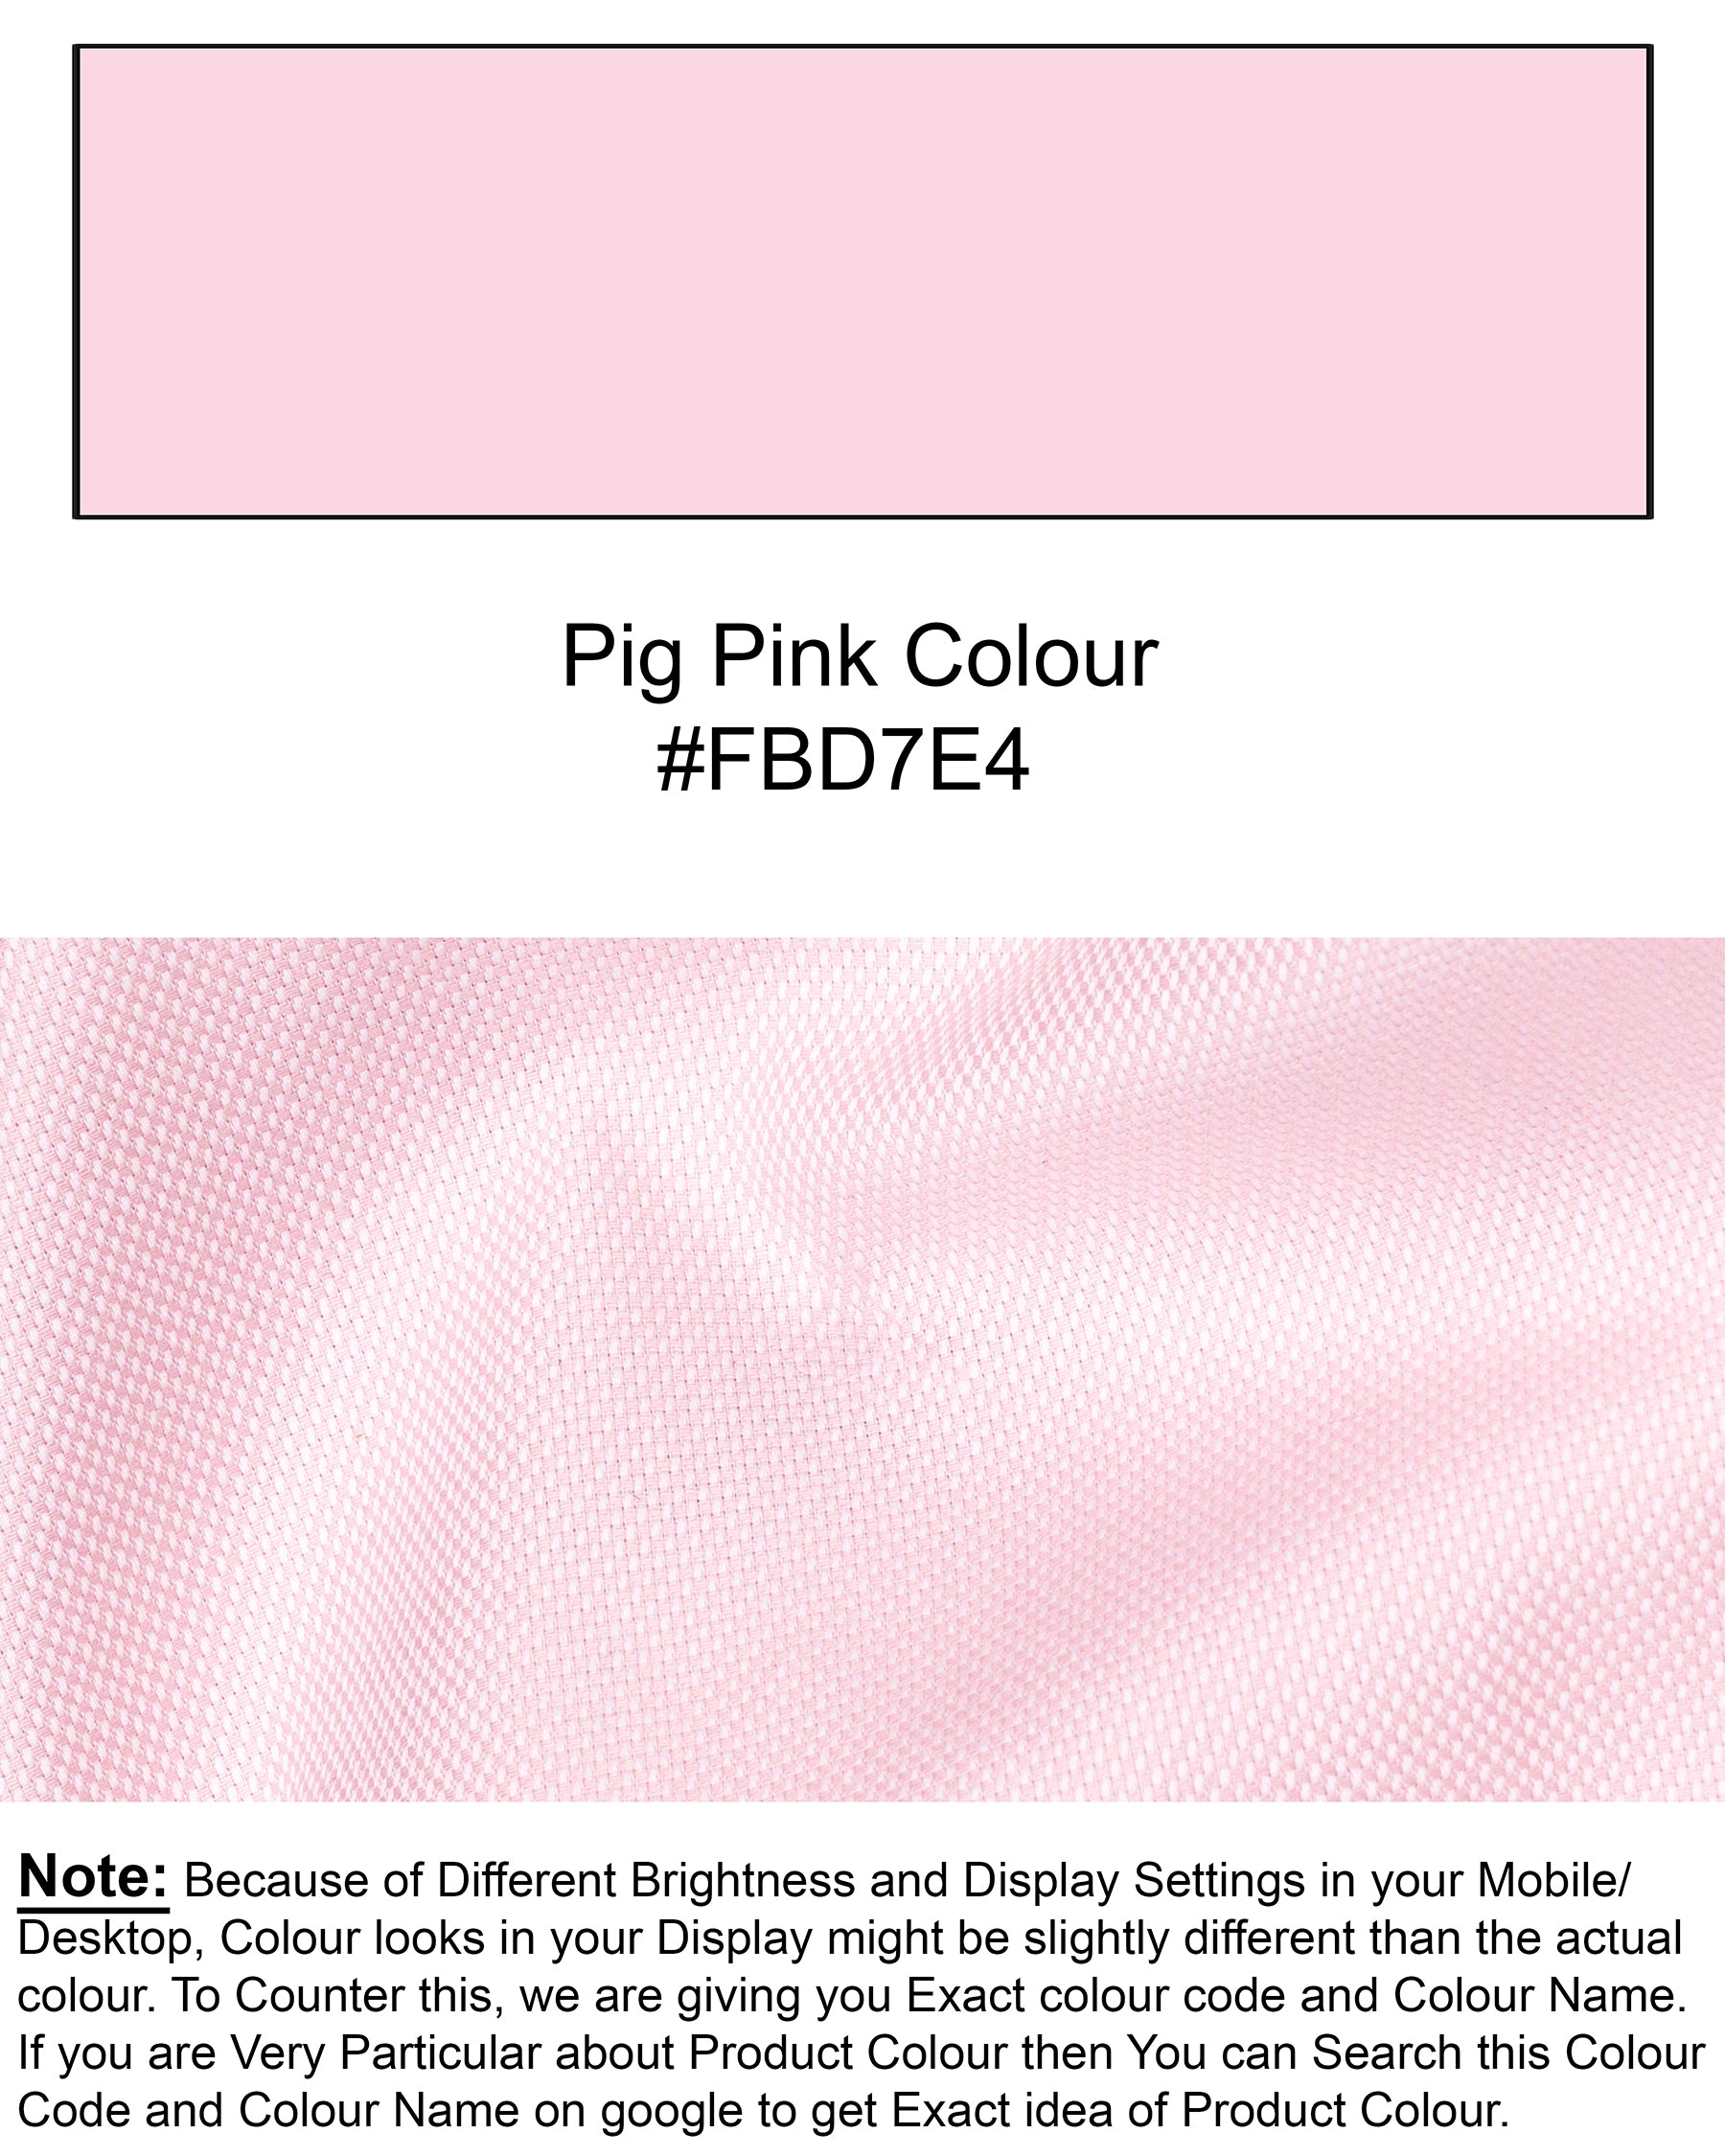 Pig Pink Dobby Textured Premium Giza Cotton Shirt 6581-CA-38,6581-CA-38,6581-CA-39,6581-CA-39,6581-CA-40,6581-CA-40,6581-CA-42,6581-CA-42,6581-CA-44,6581-CA-44,6581-CA-46,6581-CA-46,6581-CA-48,6581-CA-48,6581-CA-50,6581-CA-50,6581-CA-52,6581-CA-52